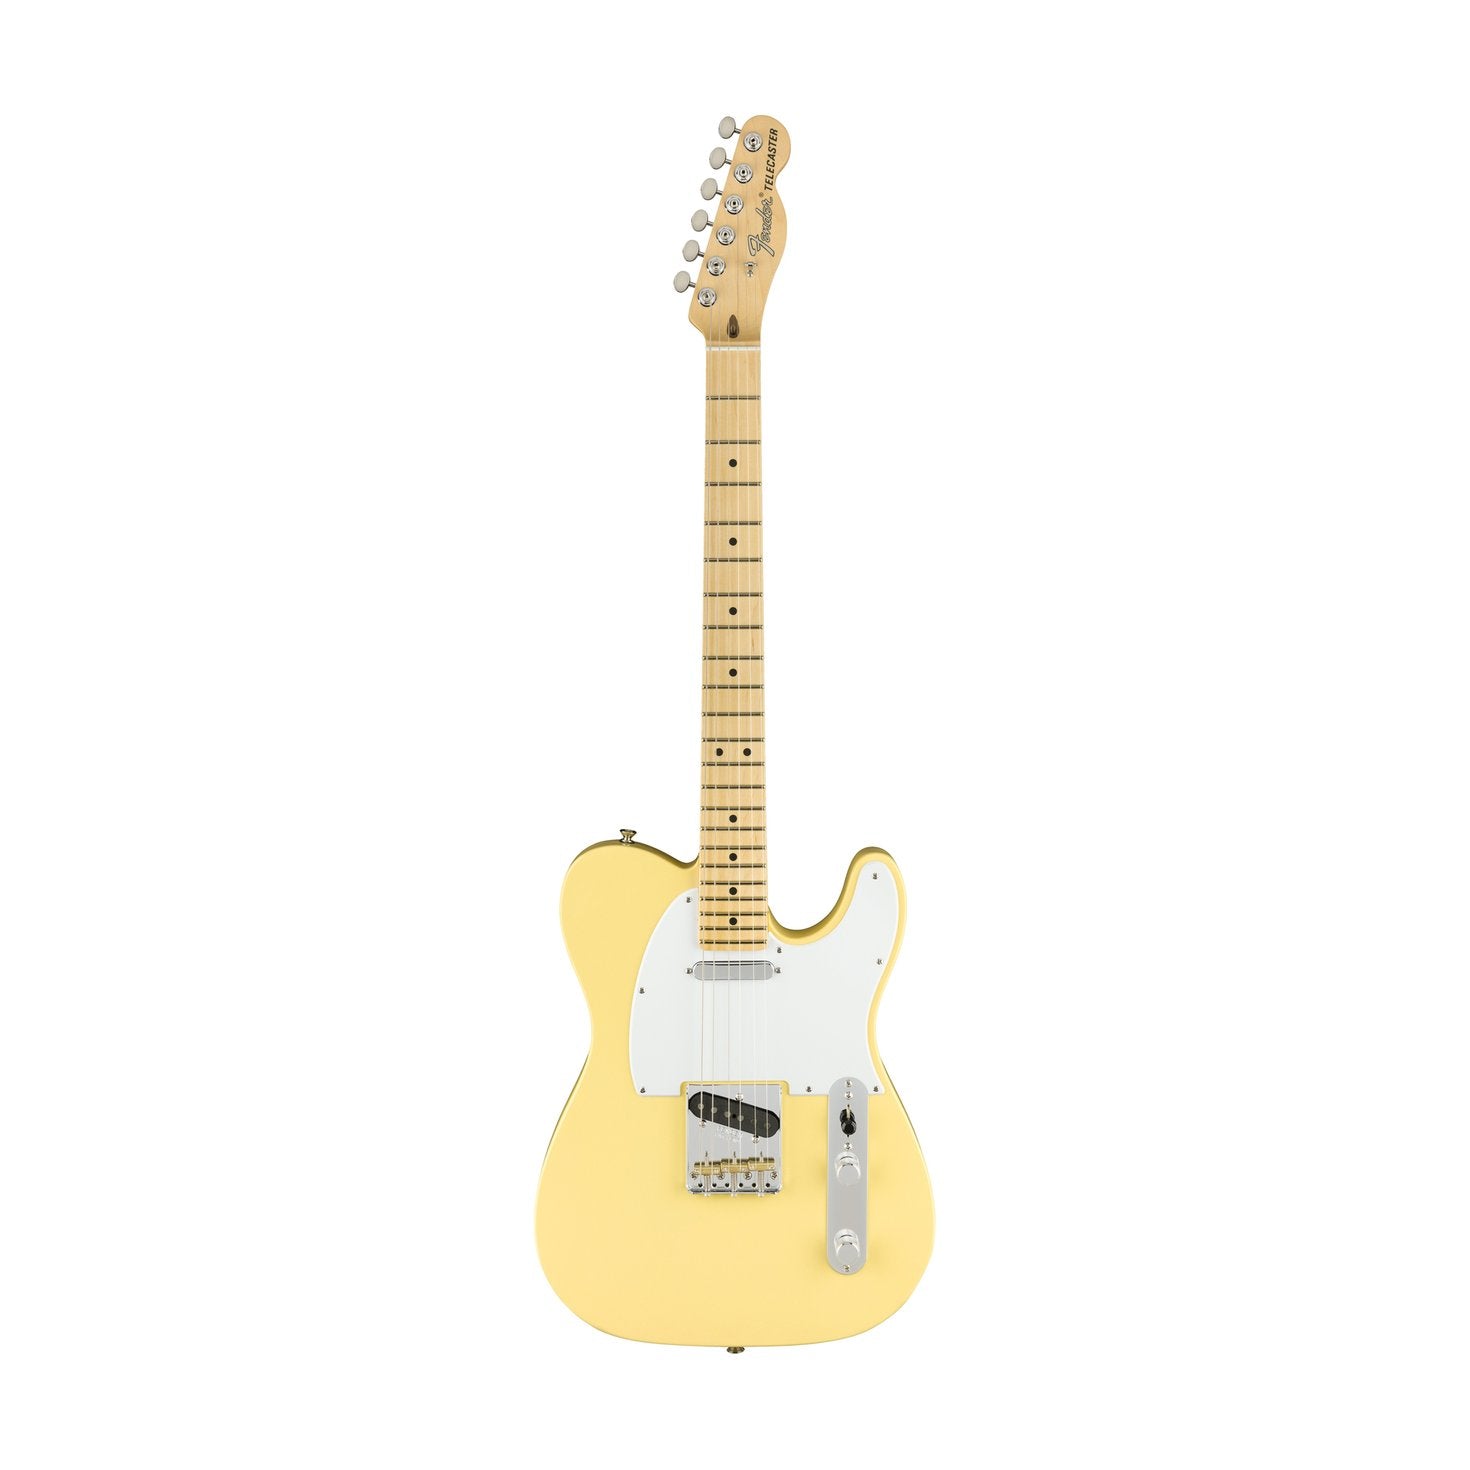 Fender American Performer Telecaster Electric Guitar, Maple FB, Vintage White, FENDER, ELECTRIC GUITAR, fender-electric-guitar-f03-011-5112-341, ZOSO MUSIC SDN BHD